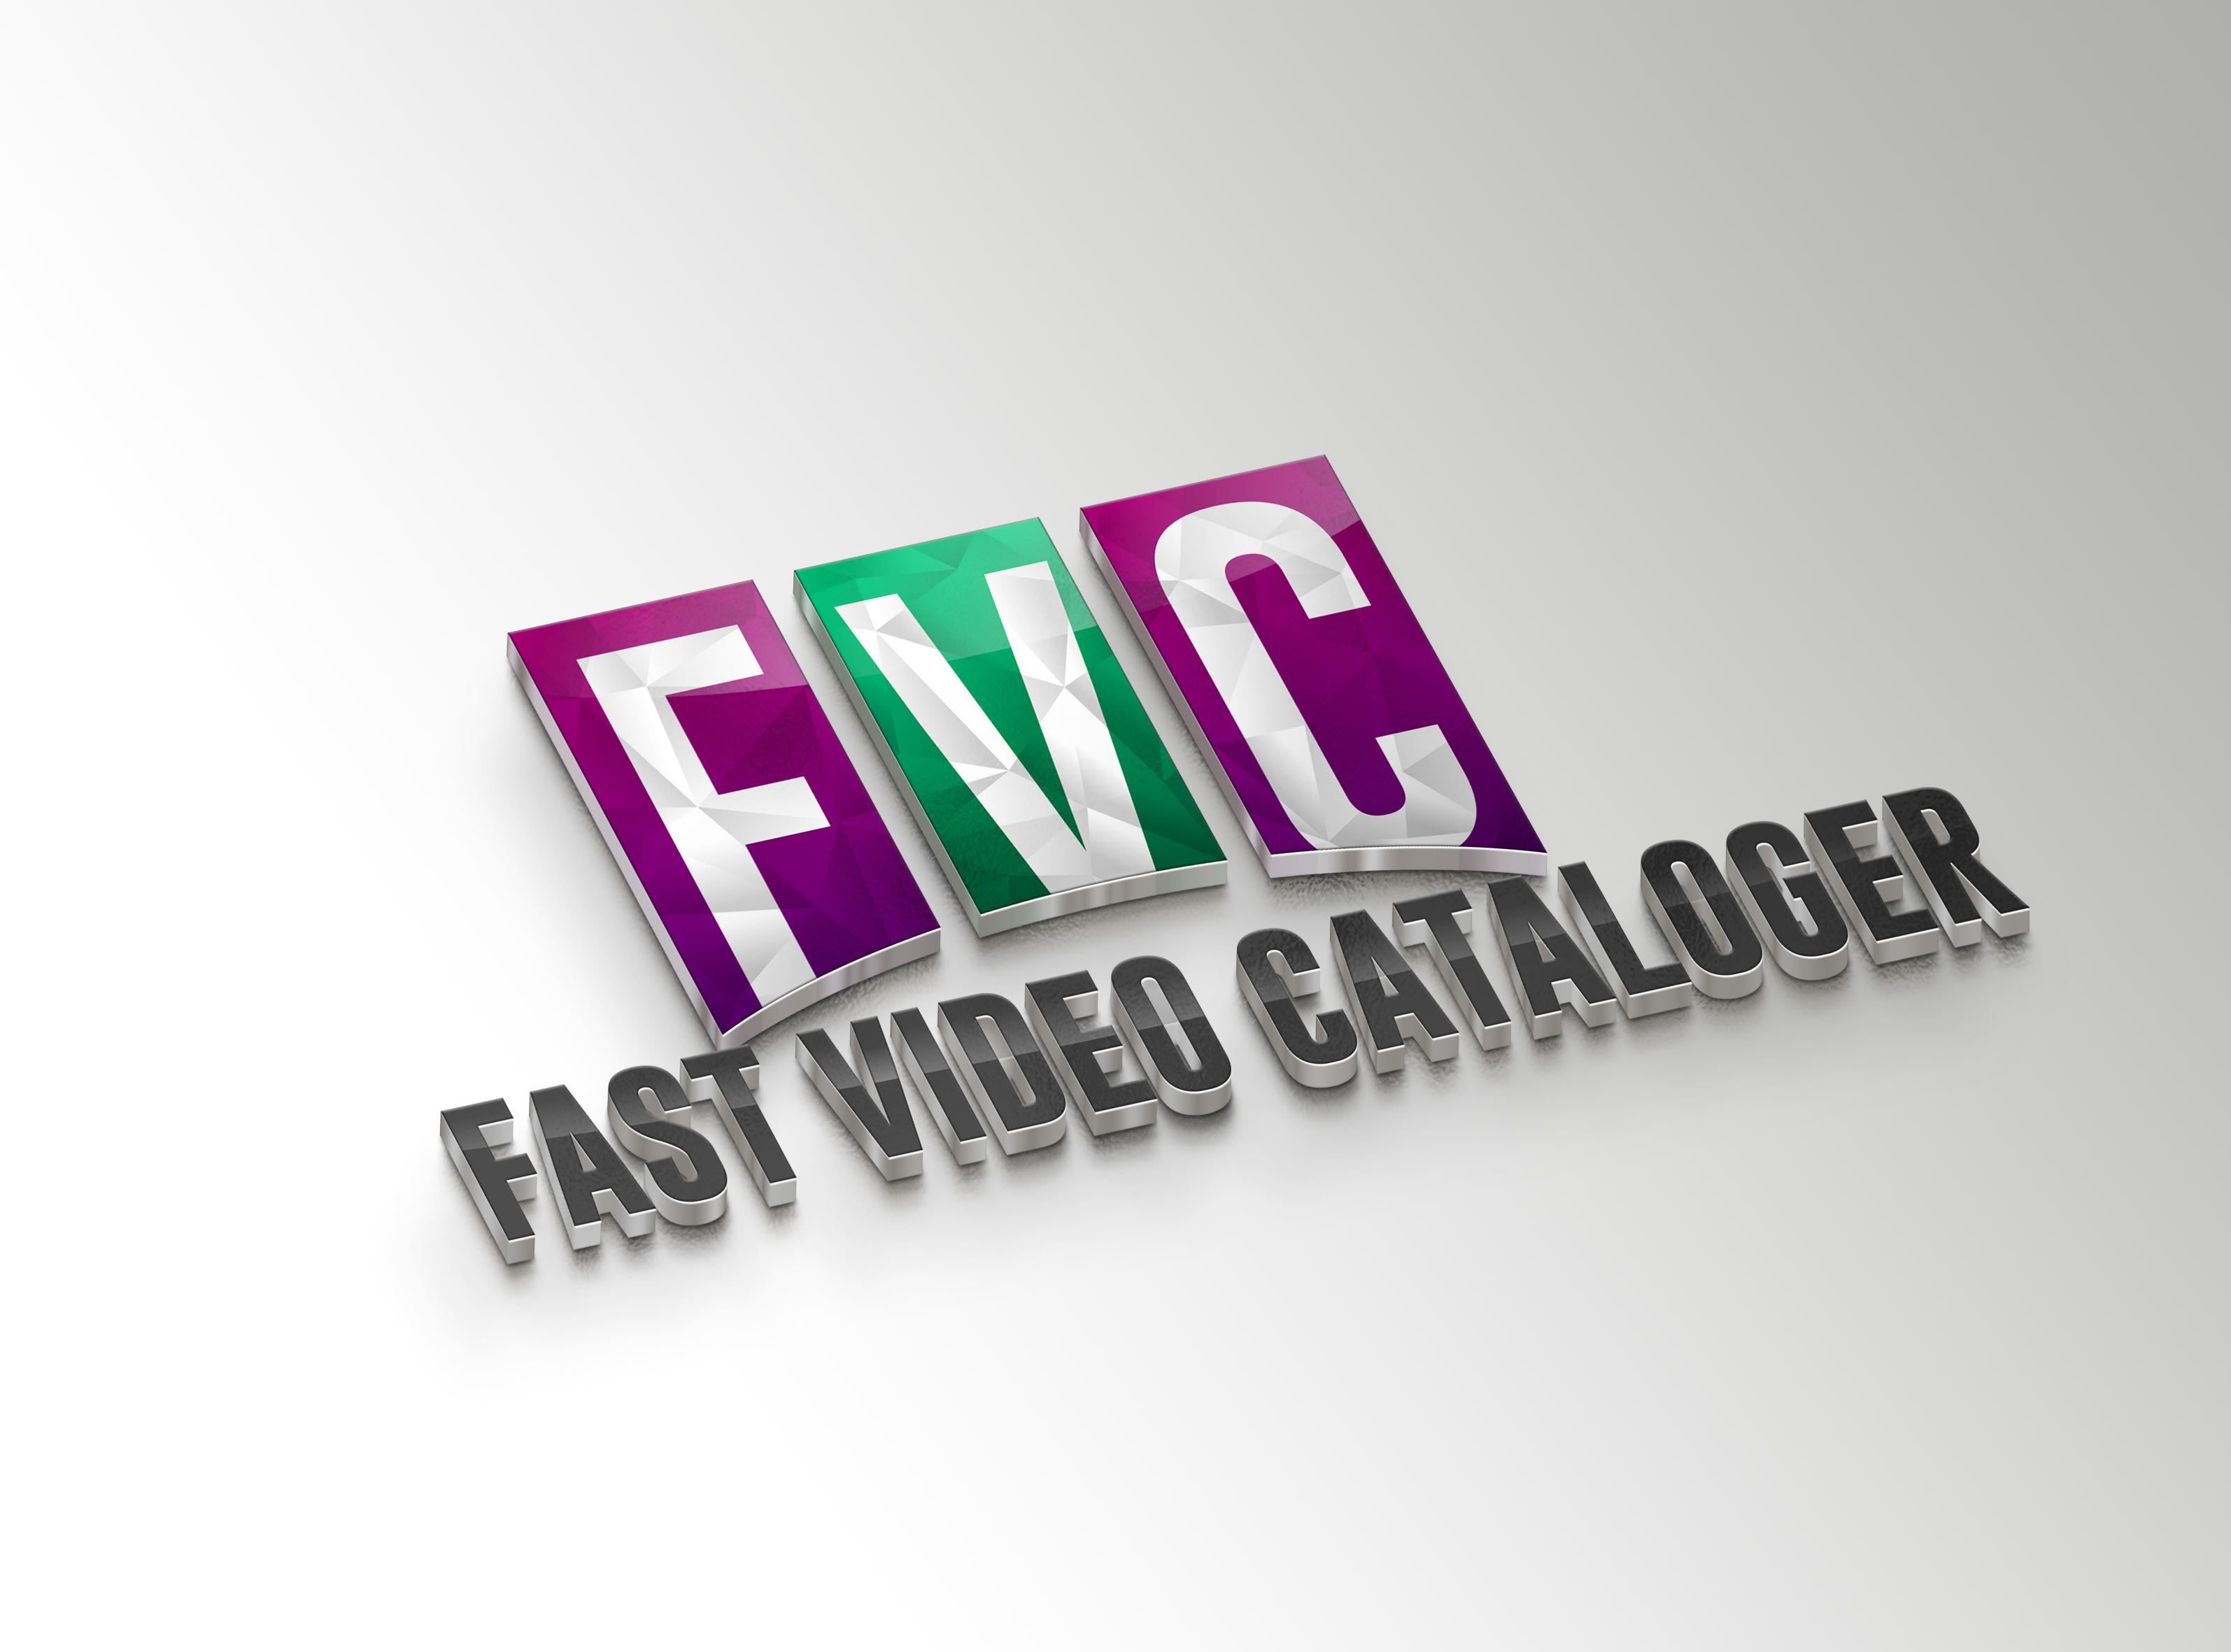 Fast Video Cataloger 8.6.3.0 for mac instal